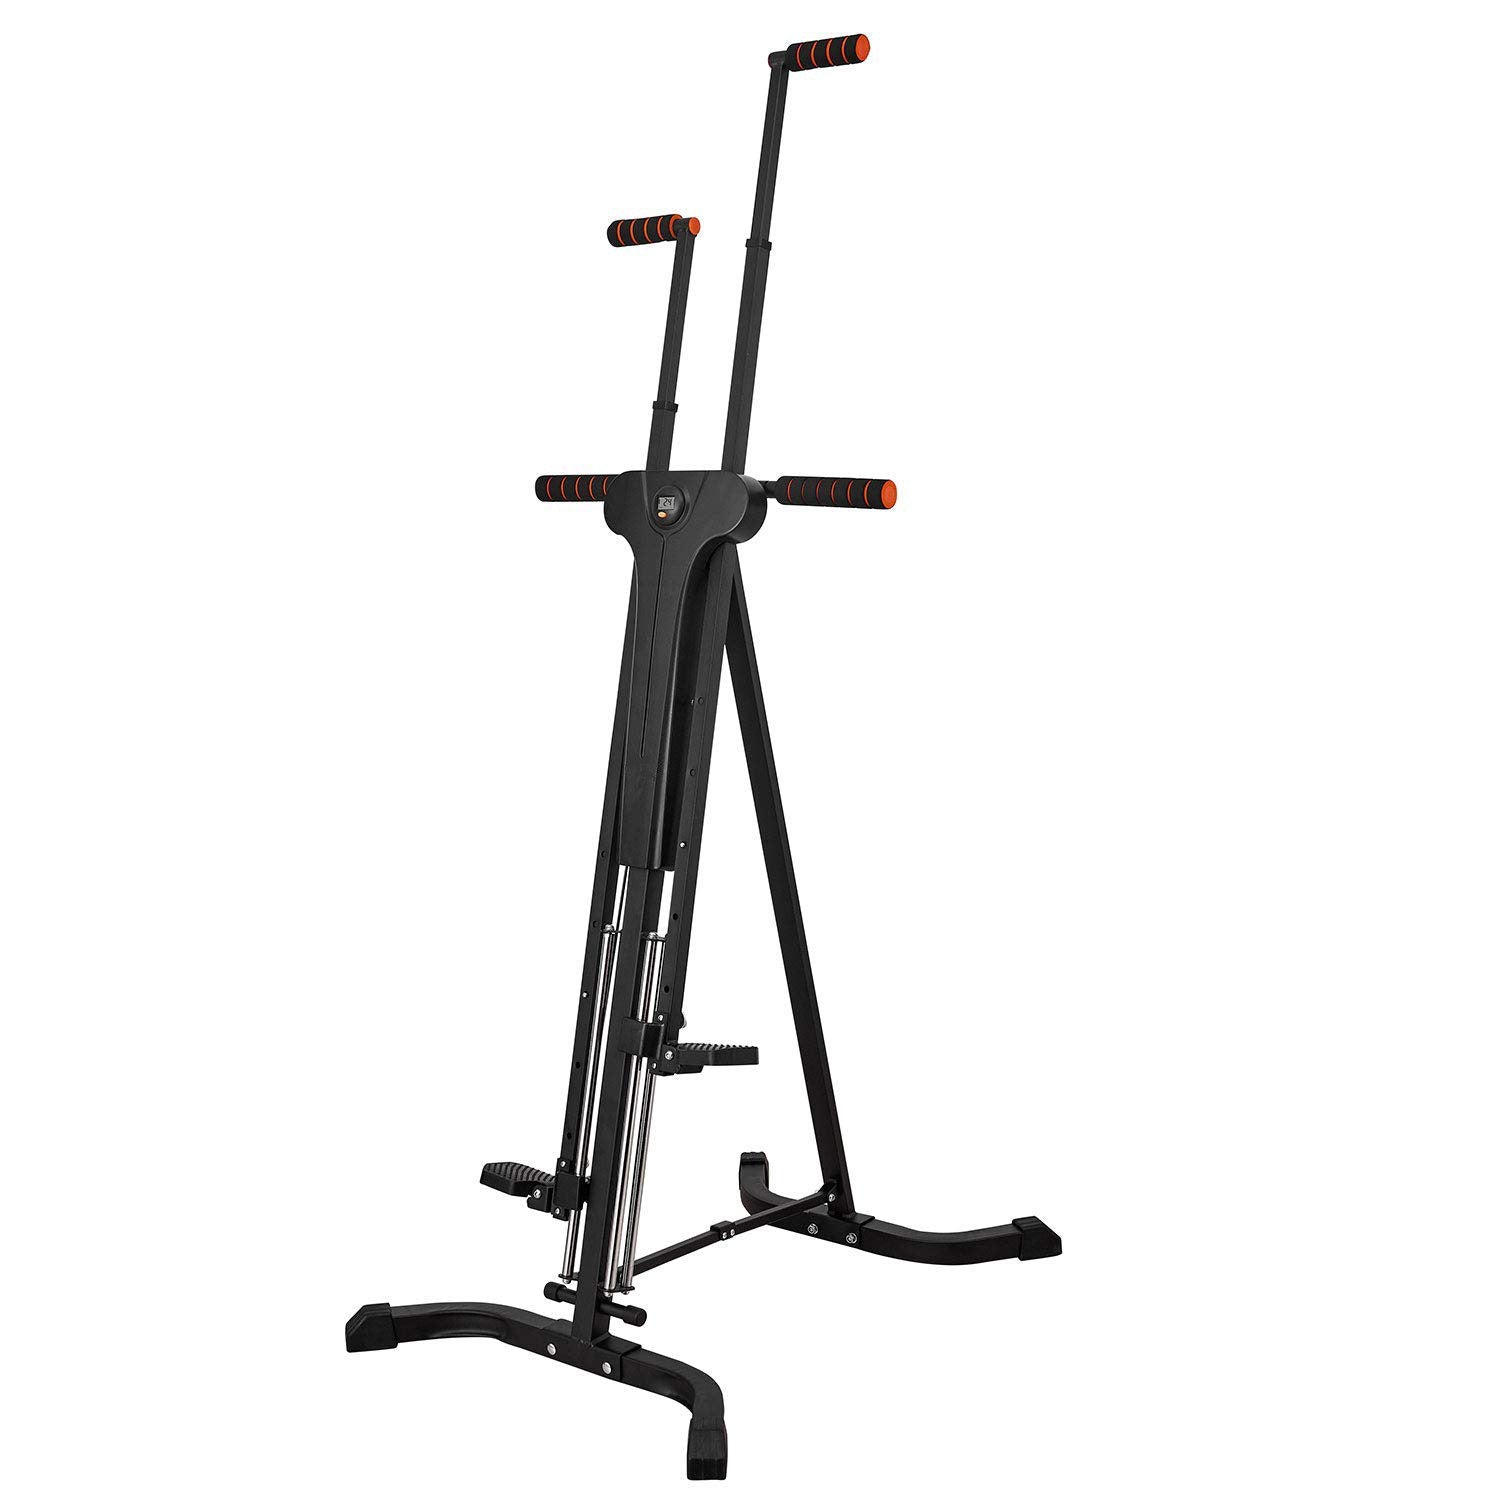 Vertical Climber Exercise Machine for Home Gym, Climber Cardio Workout